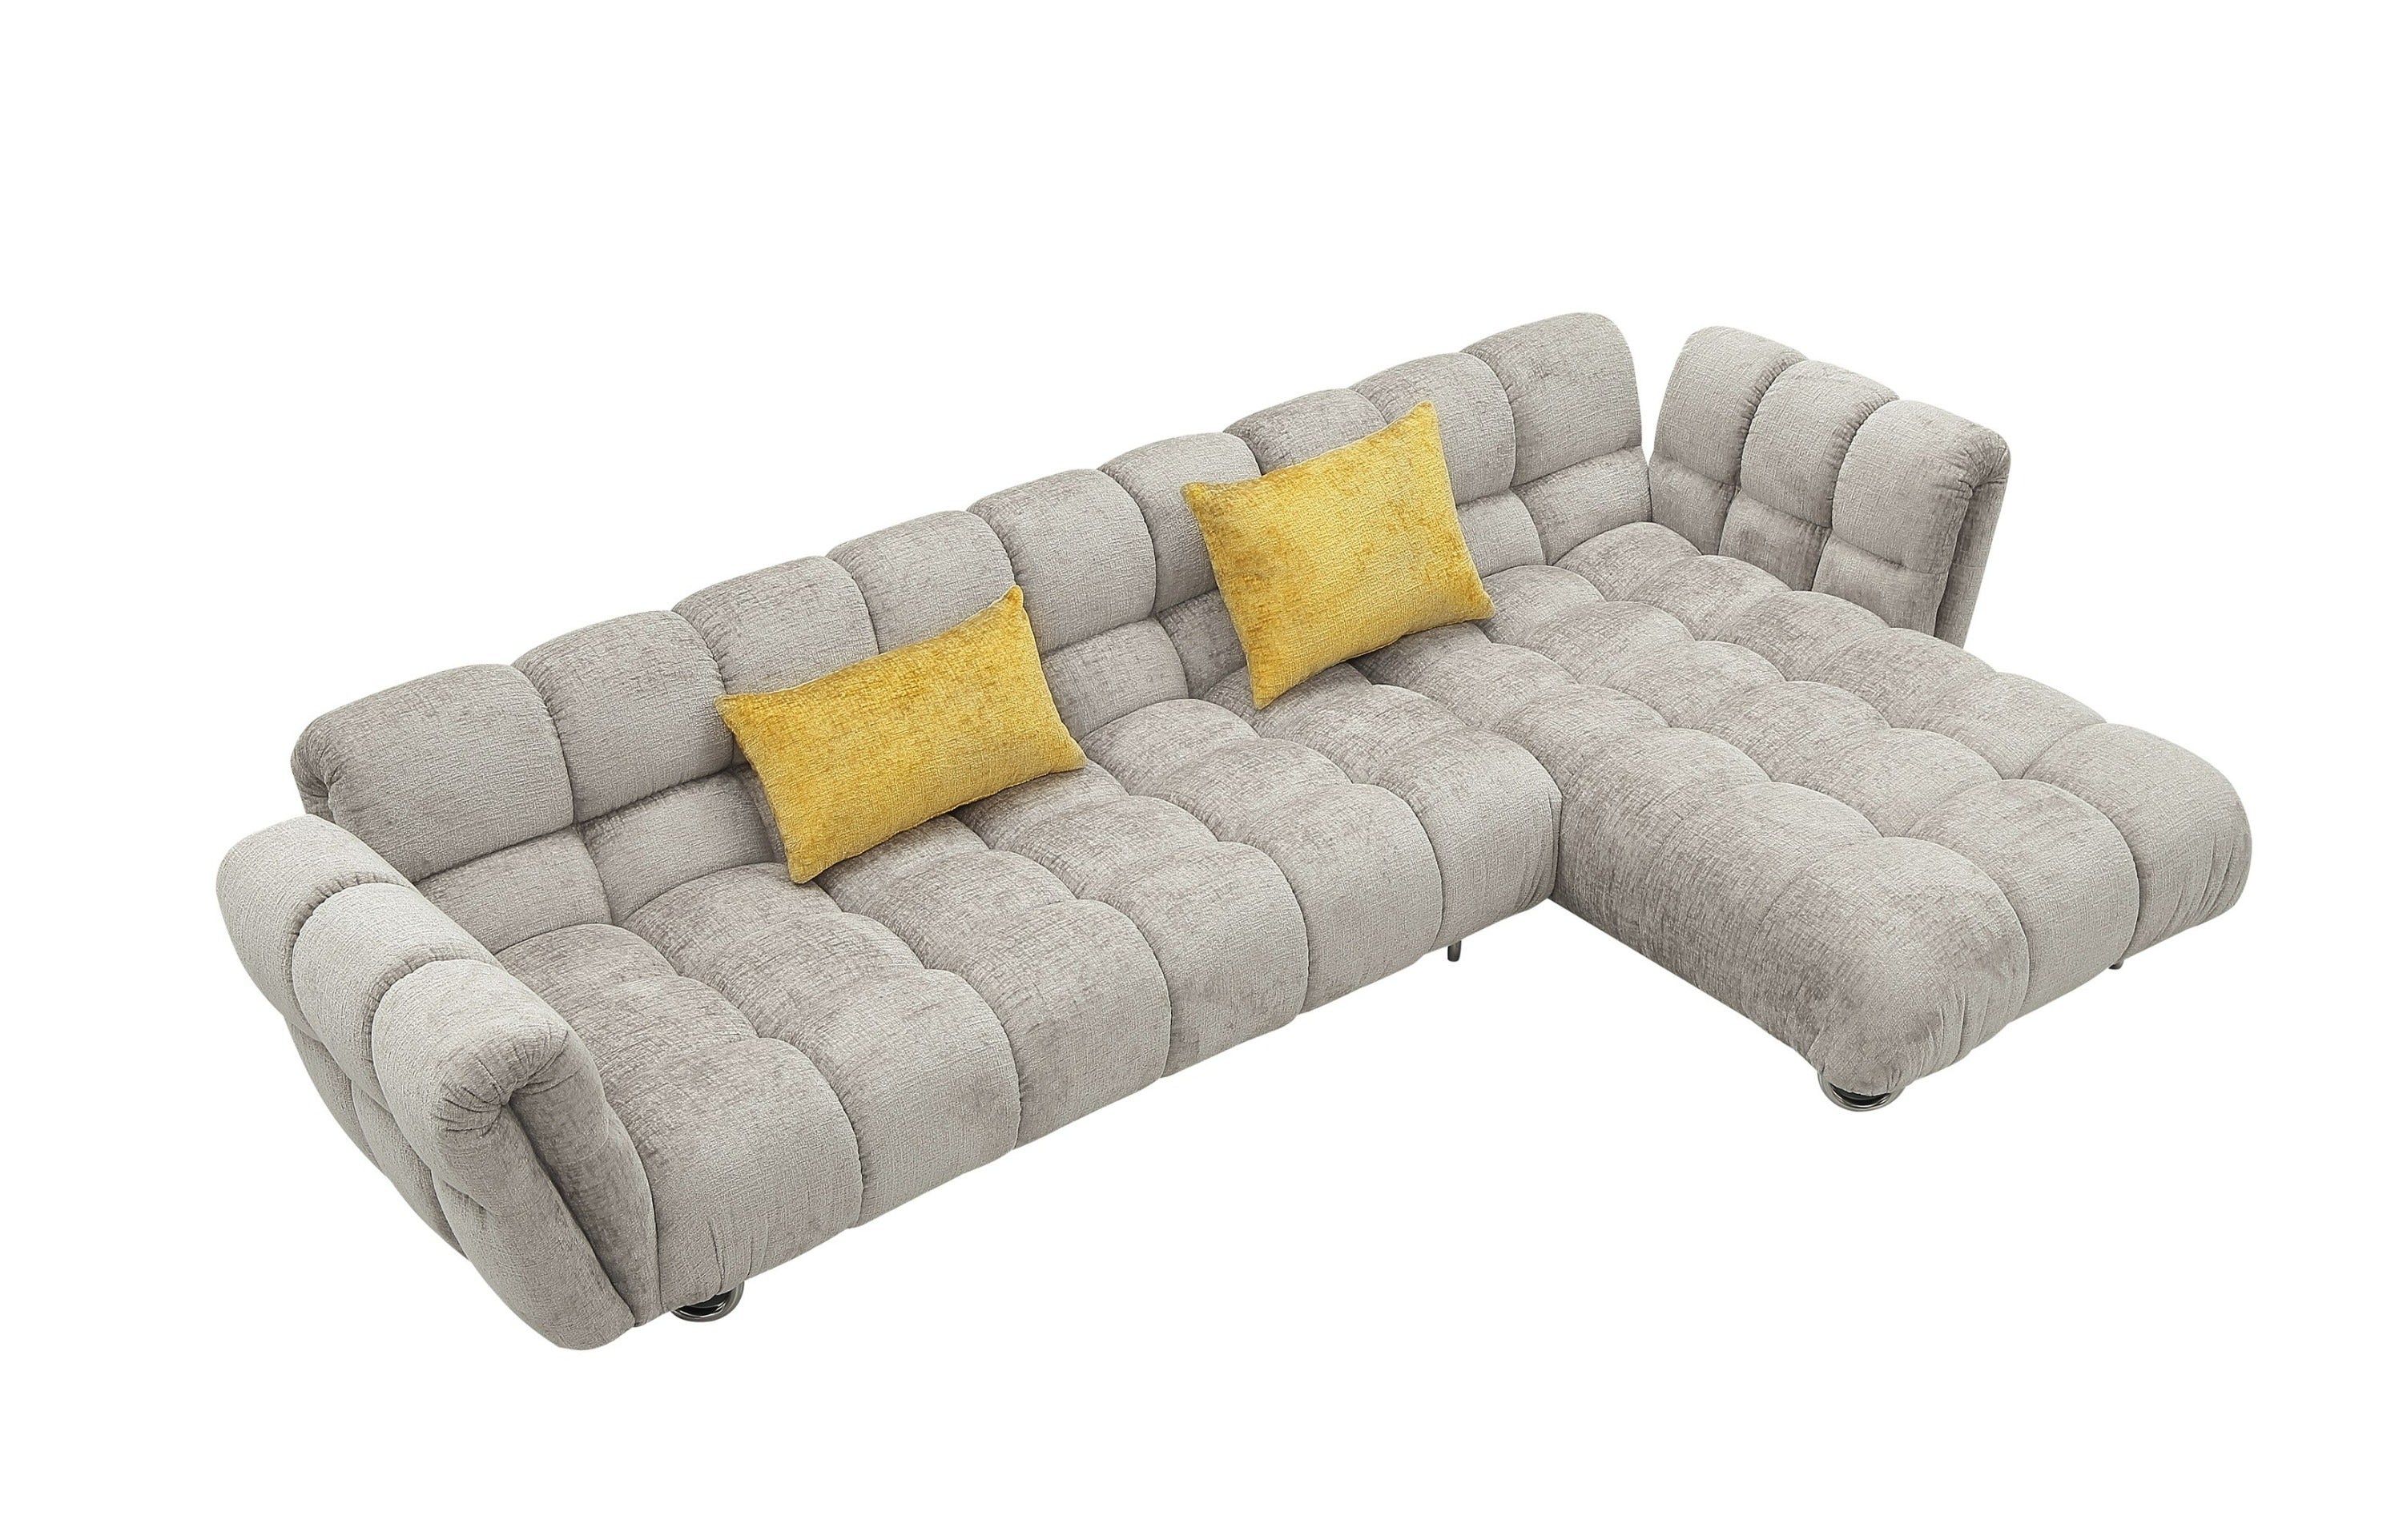 Divani Casa Jacinda - Modern Fabric Right Facing Sectional Sofa with 2 Pillows-Sectional Sofa-VIG-Wall2Wall Furnishings